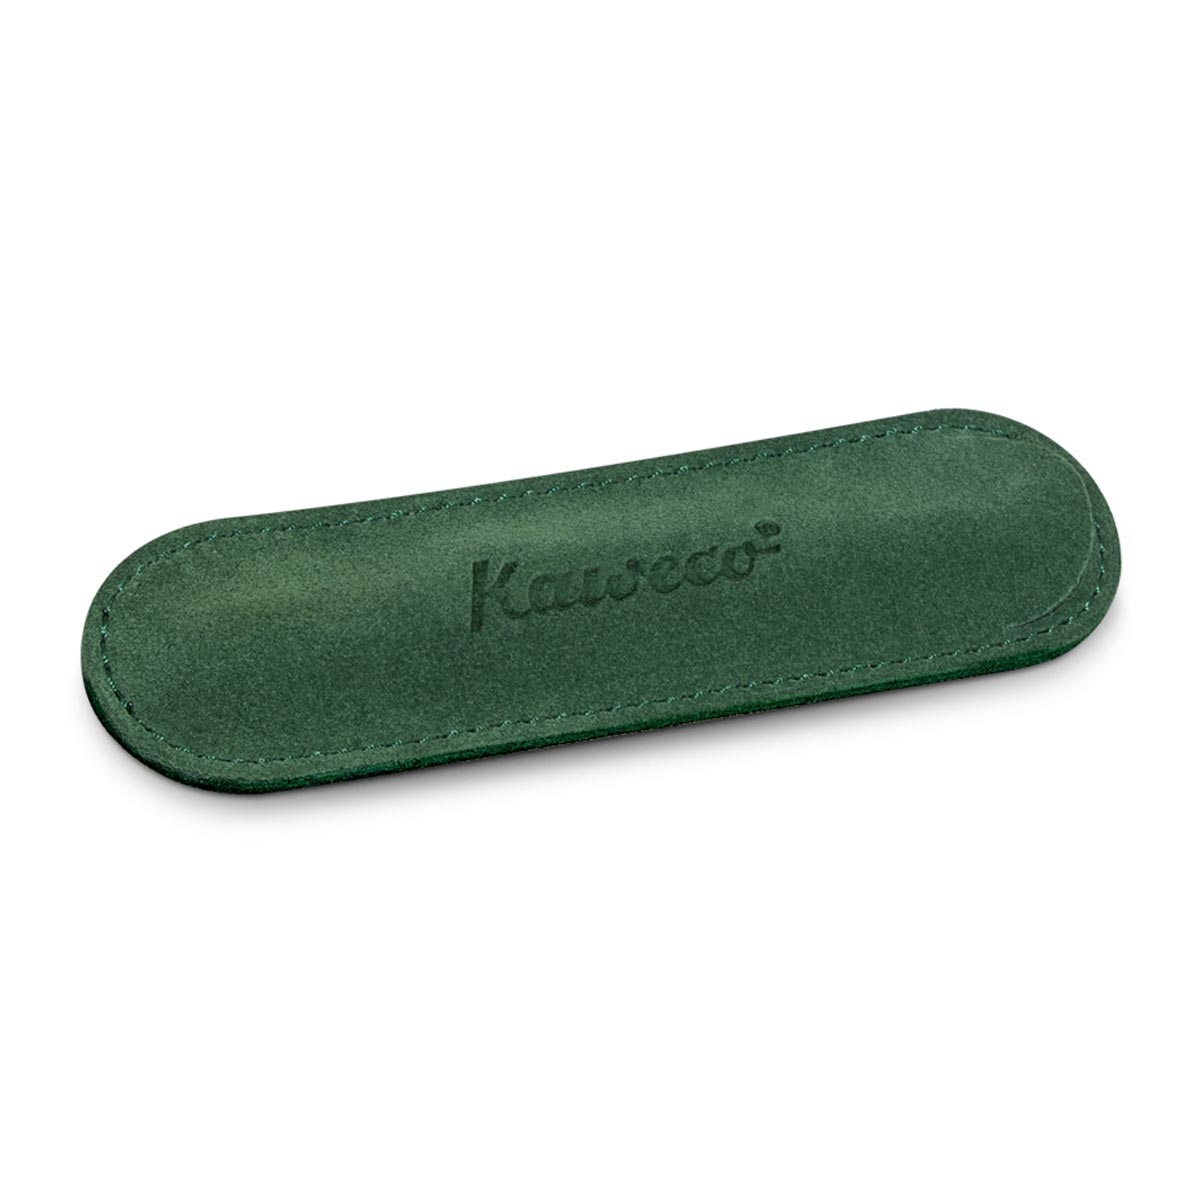 Kaweco SPORT ECO 1er case velor green